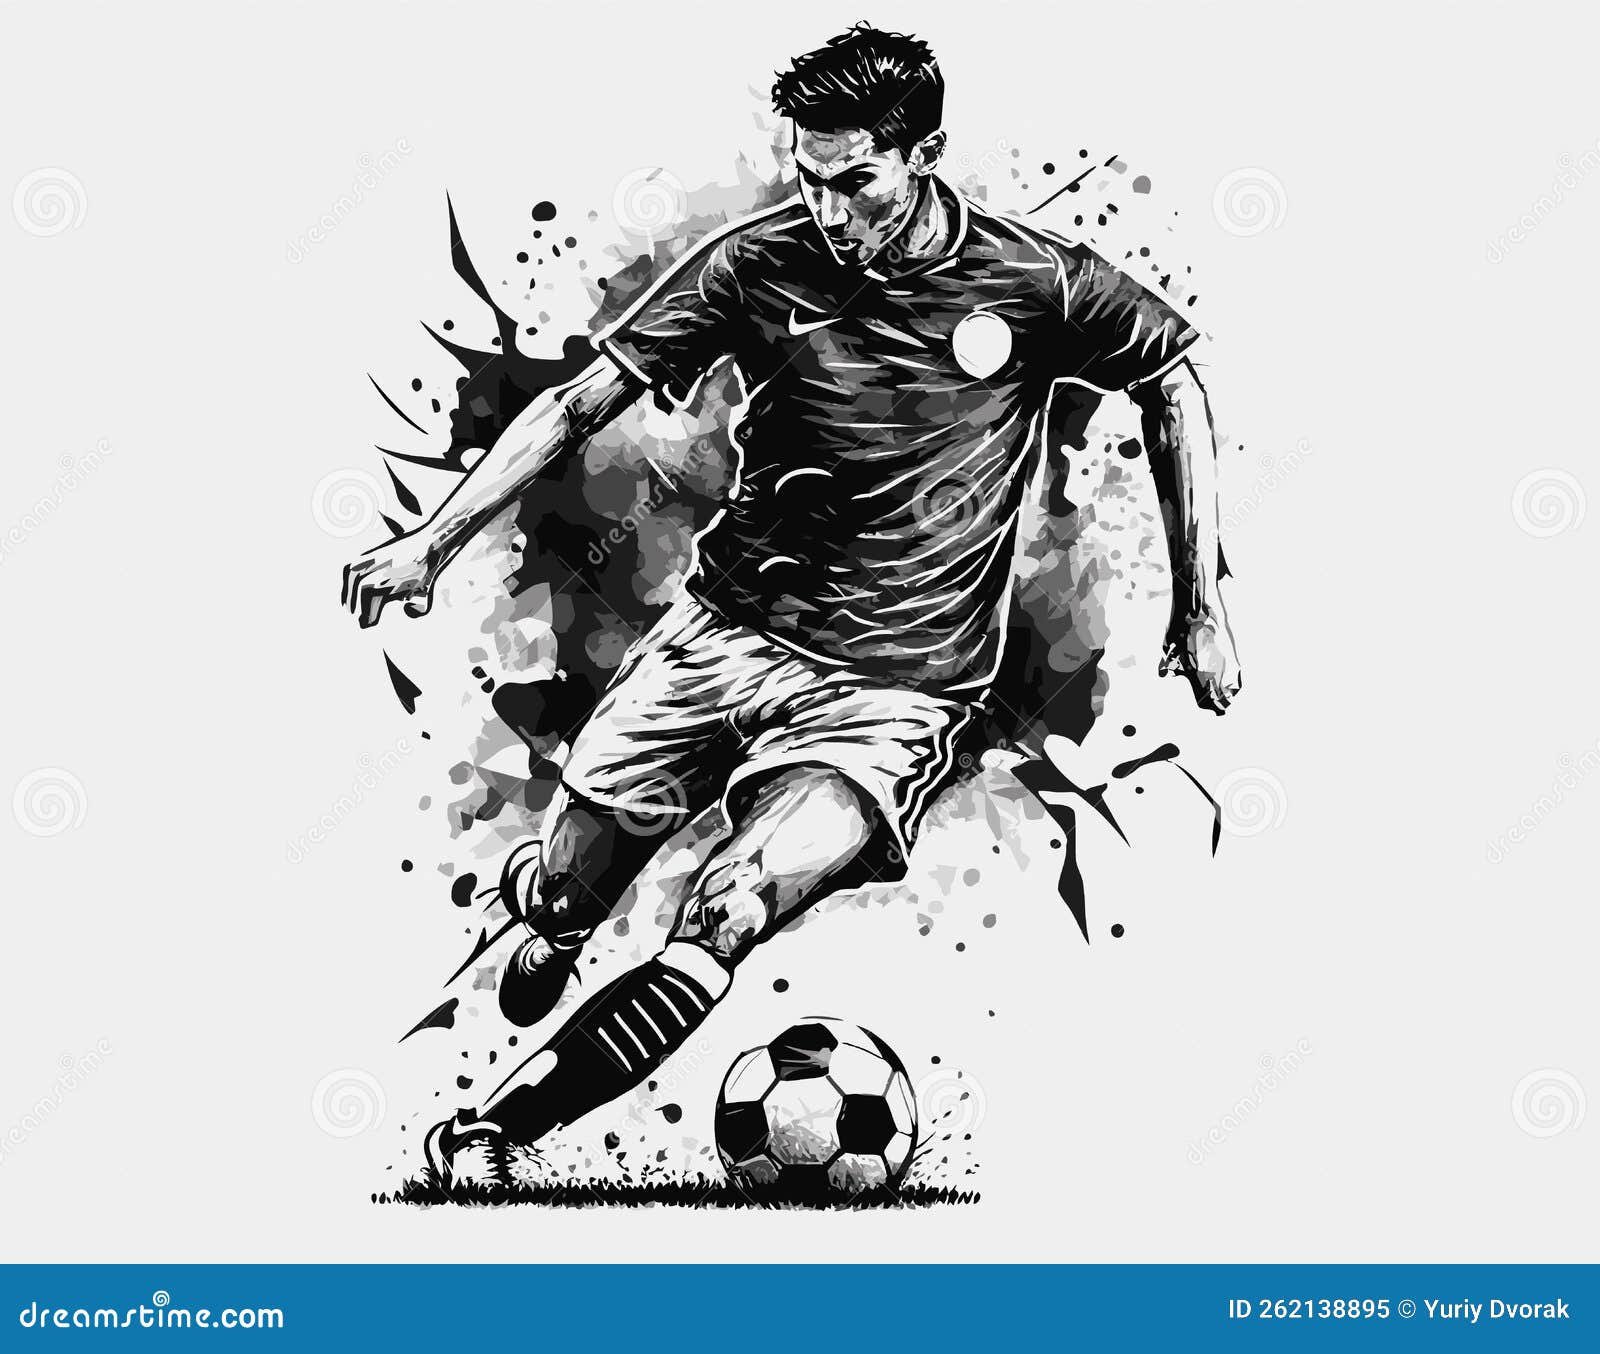 Soccer Player Kicking Ball Vector Illustration. Football Player Sketch  Style Design. Stock Vector - Illustration of pitch, sketch: 262138895